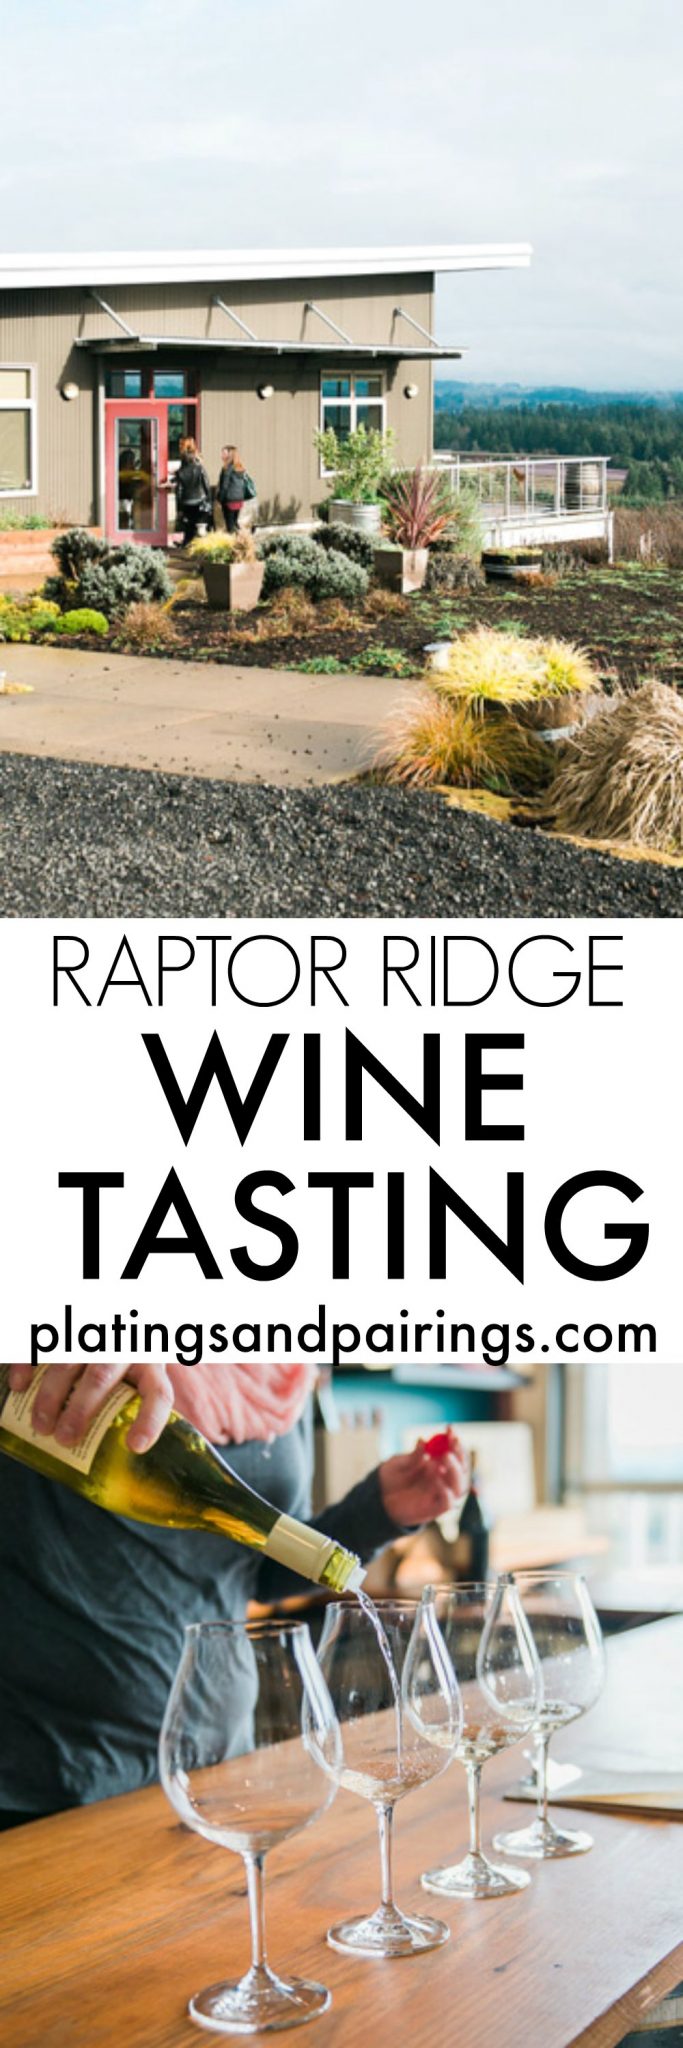 Raptor Ridge in Newberg, Oregon - A Day of Wine Tasting | platingsandpairings.com